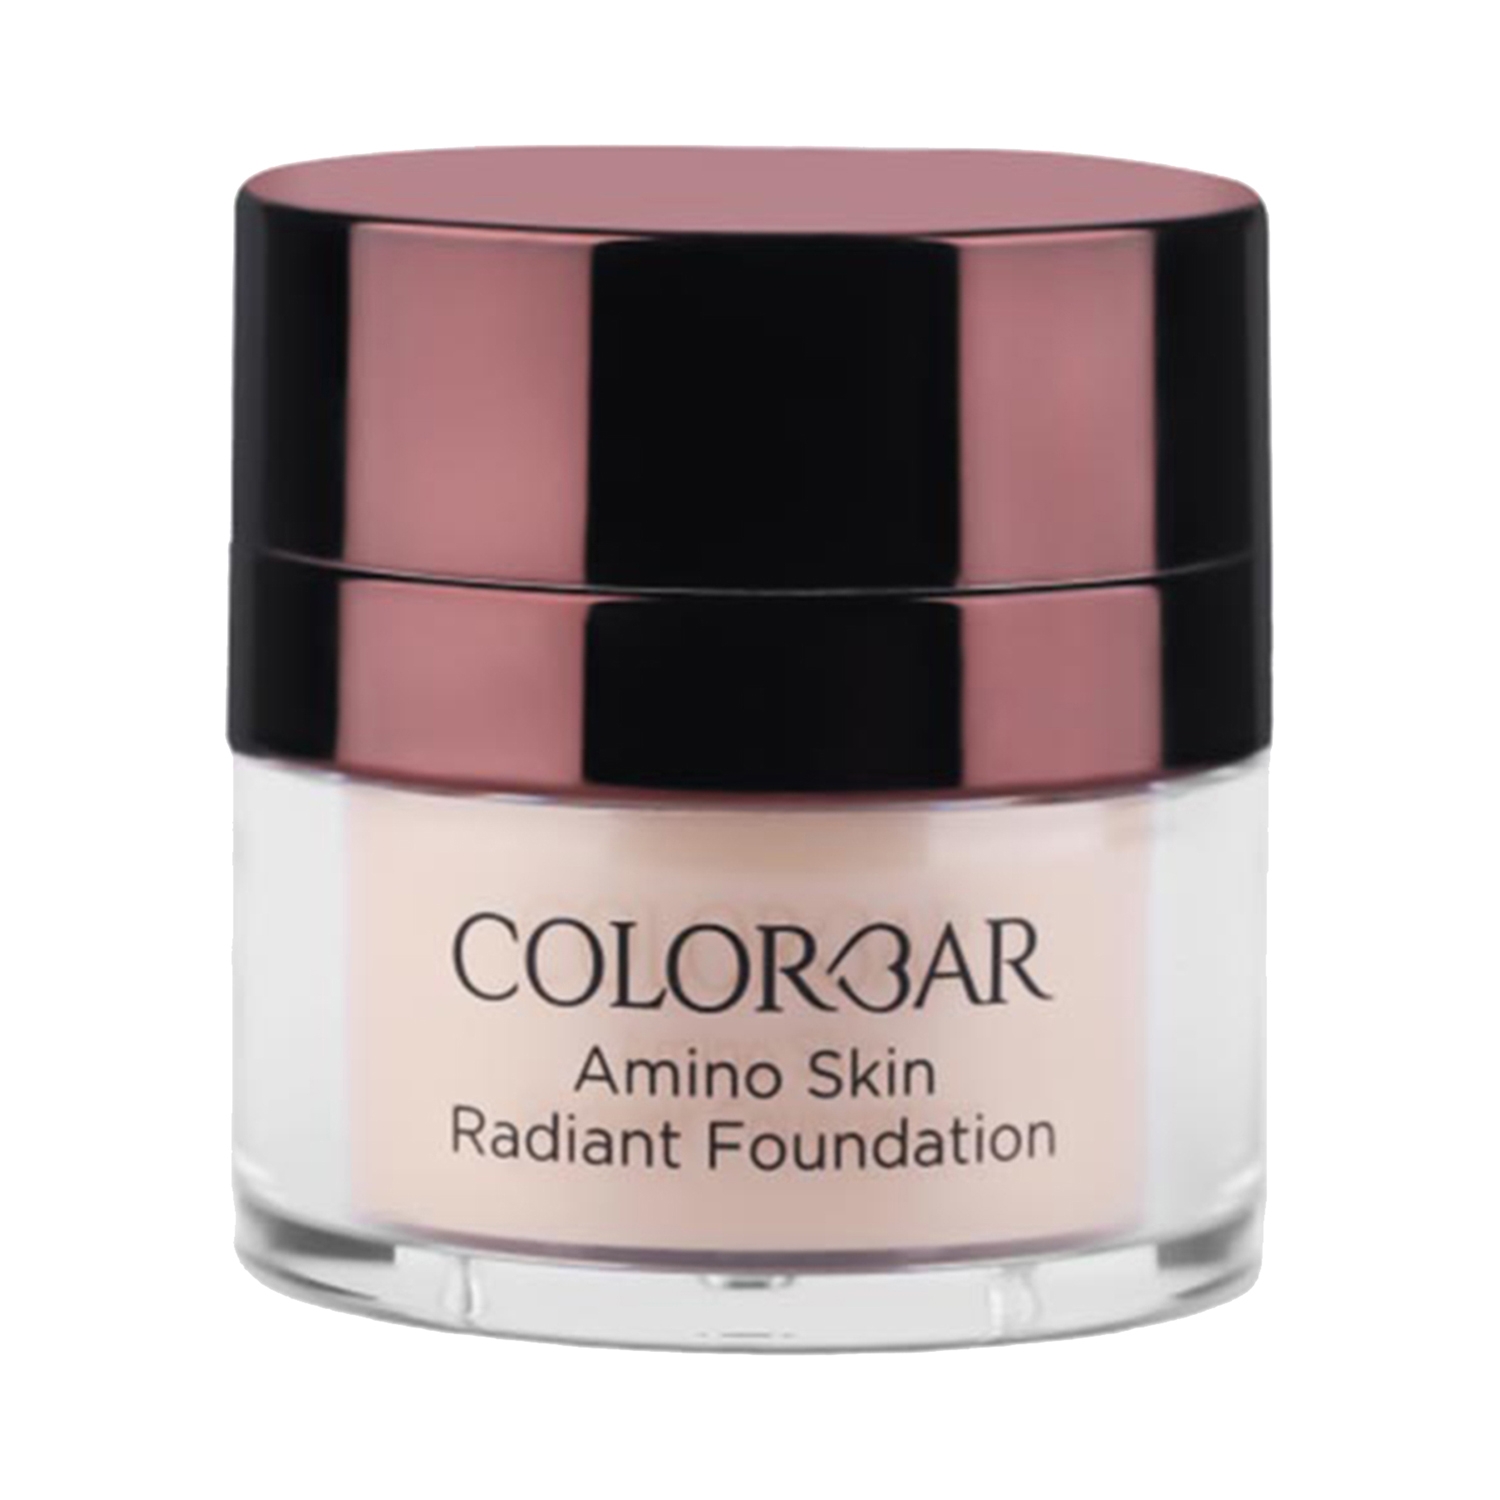 Colorbar | Colorbar Amino Skin Radiant Foundation - 005 Sand Medium (15g)